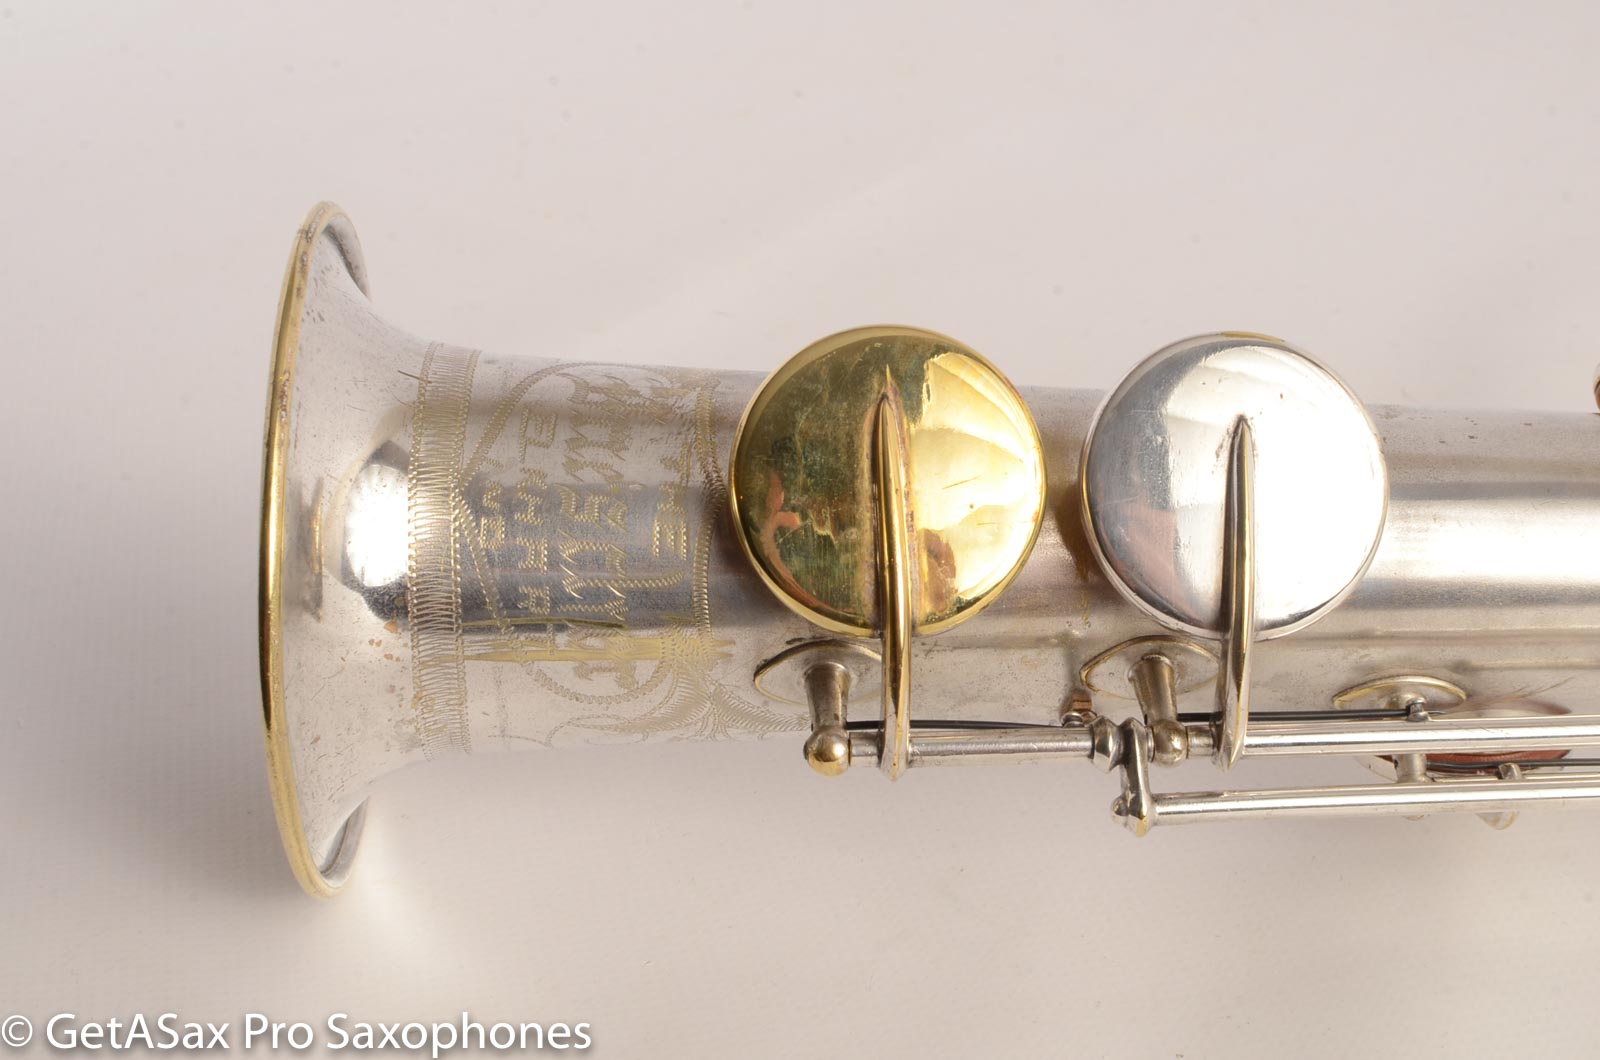 Buescher True Tone Series IV Soprano Saxophone Overhauled